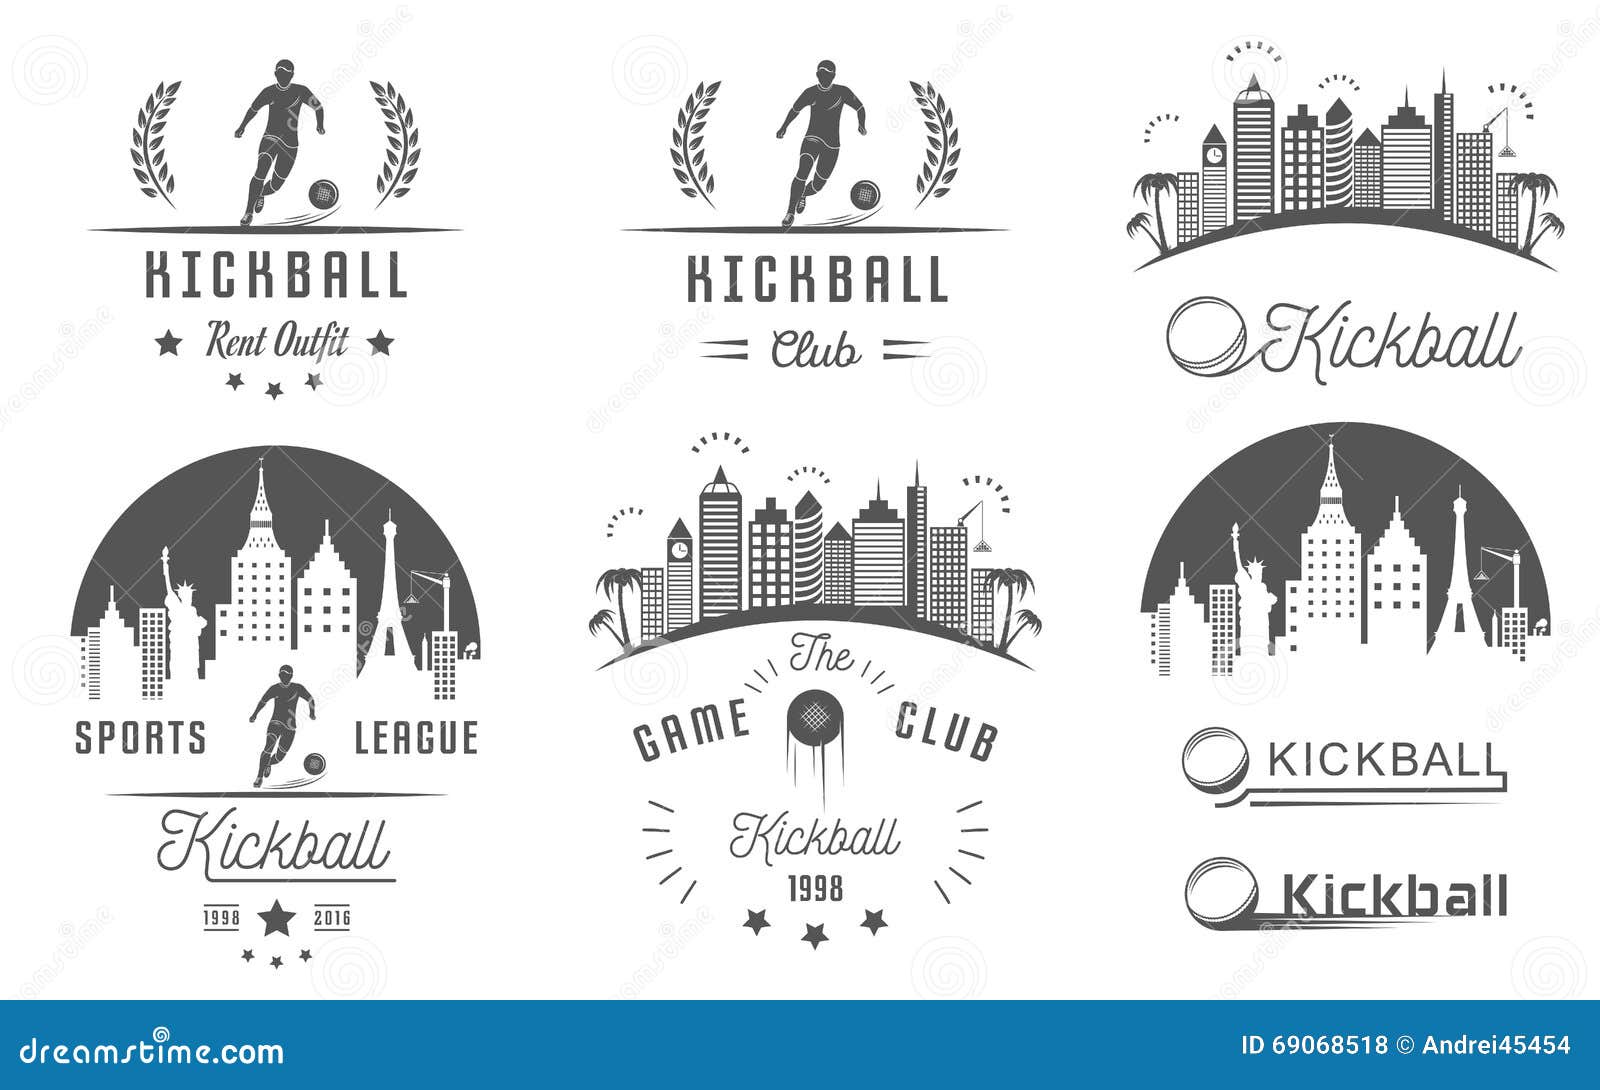 set of kickball logo, badges and emblems